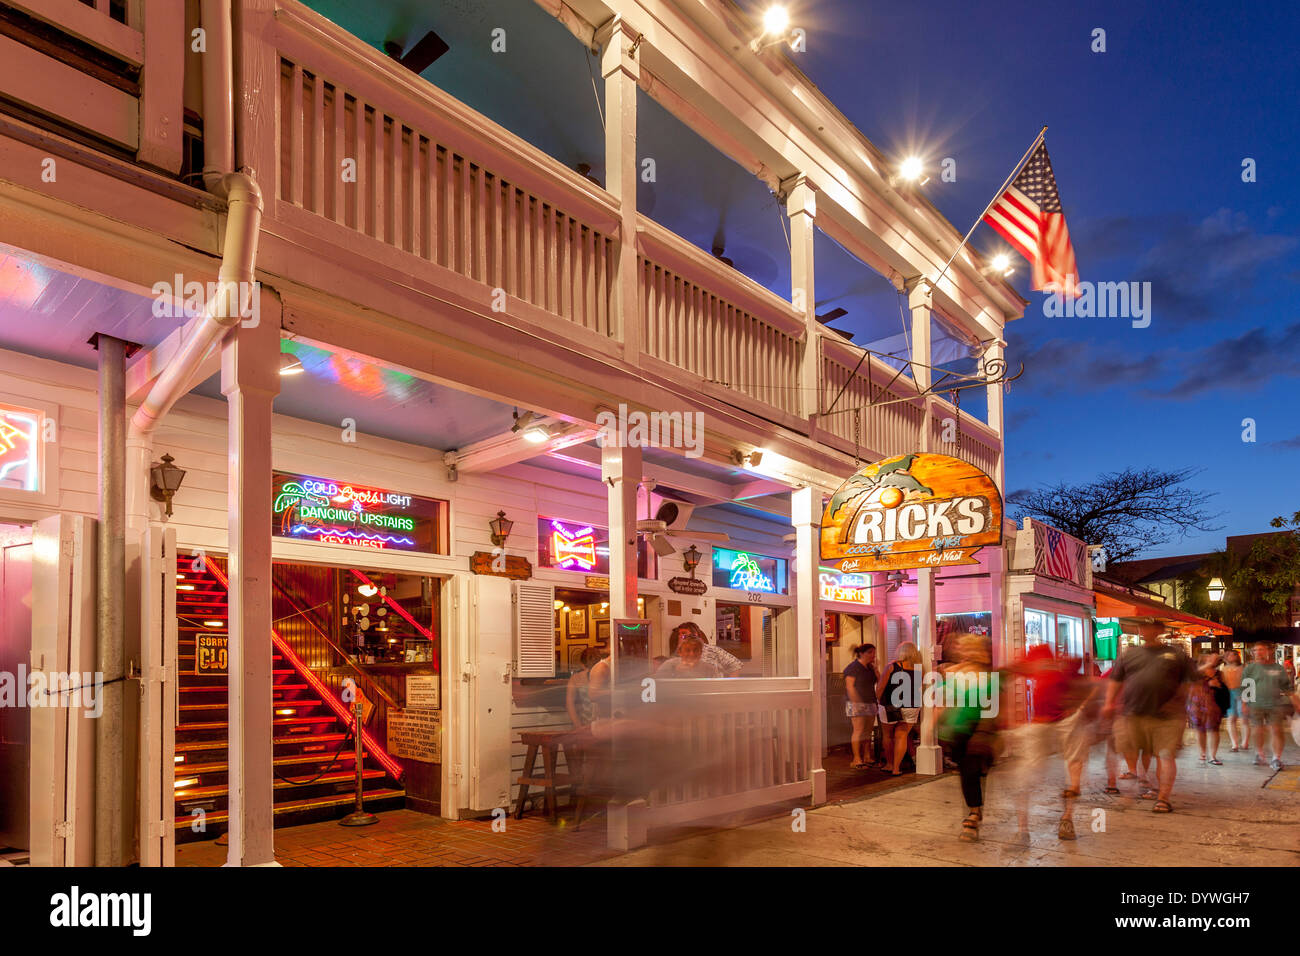 Rick's Bar, Duval Street, Key West, Florida, USA Stock Photo, Royalty